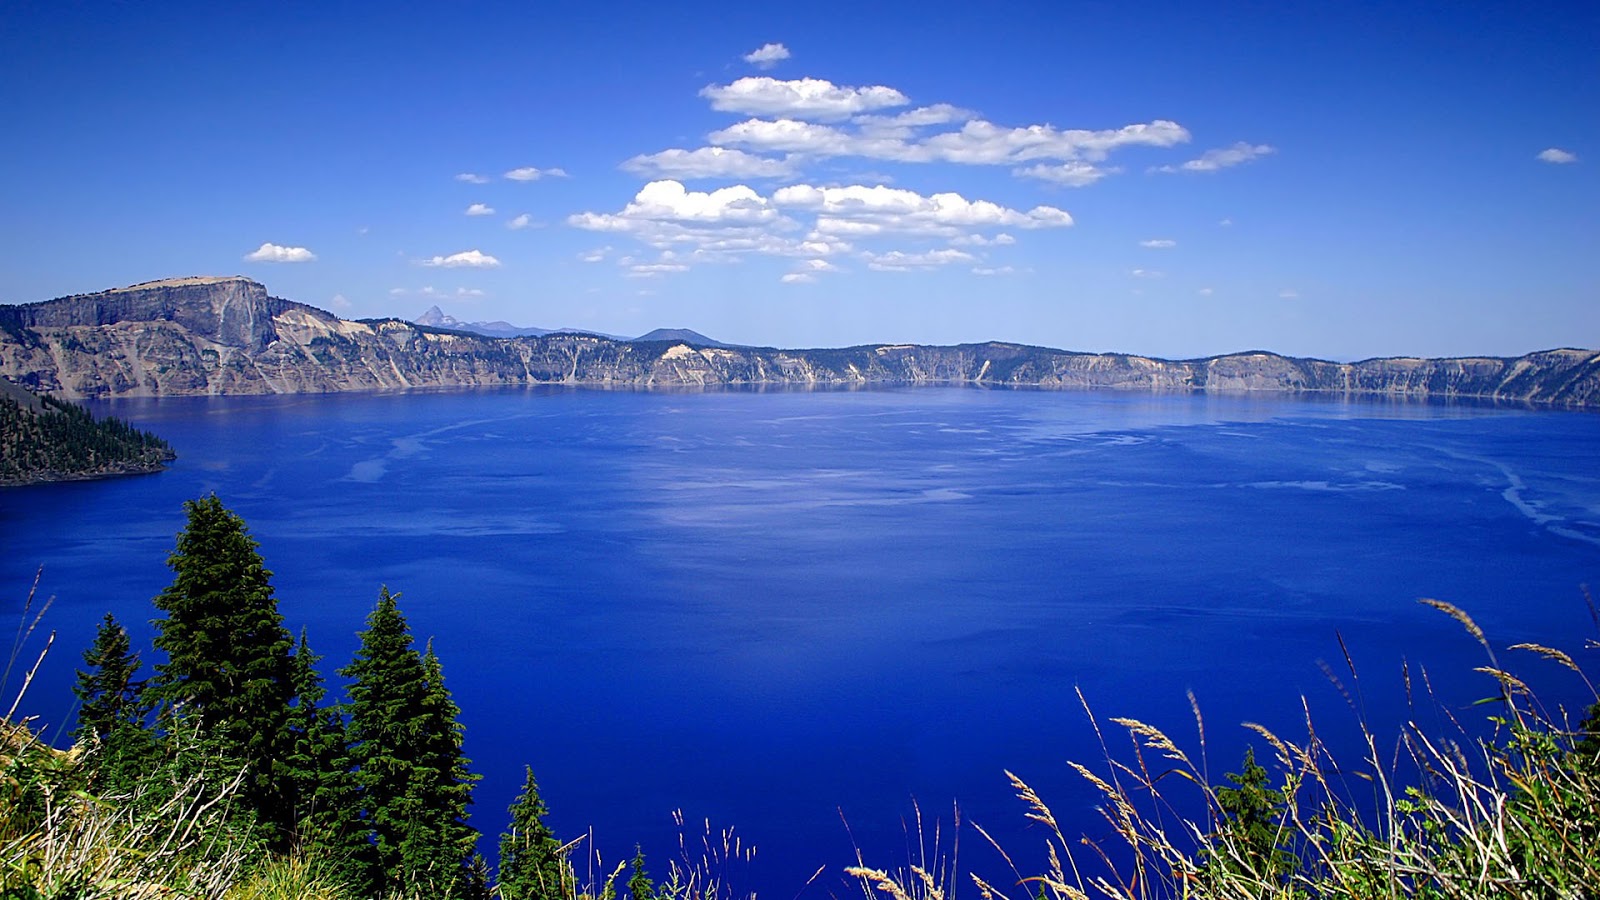 View of Lake Baikal